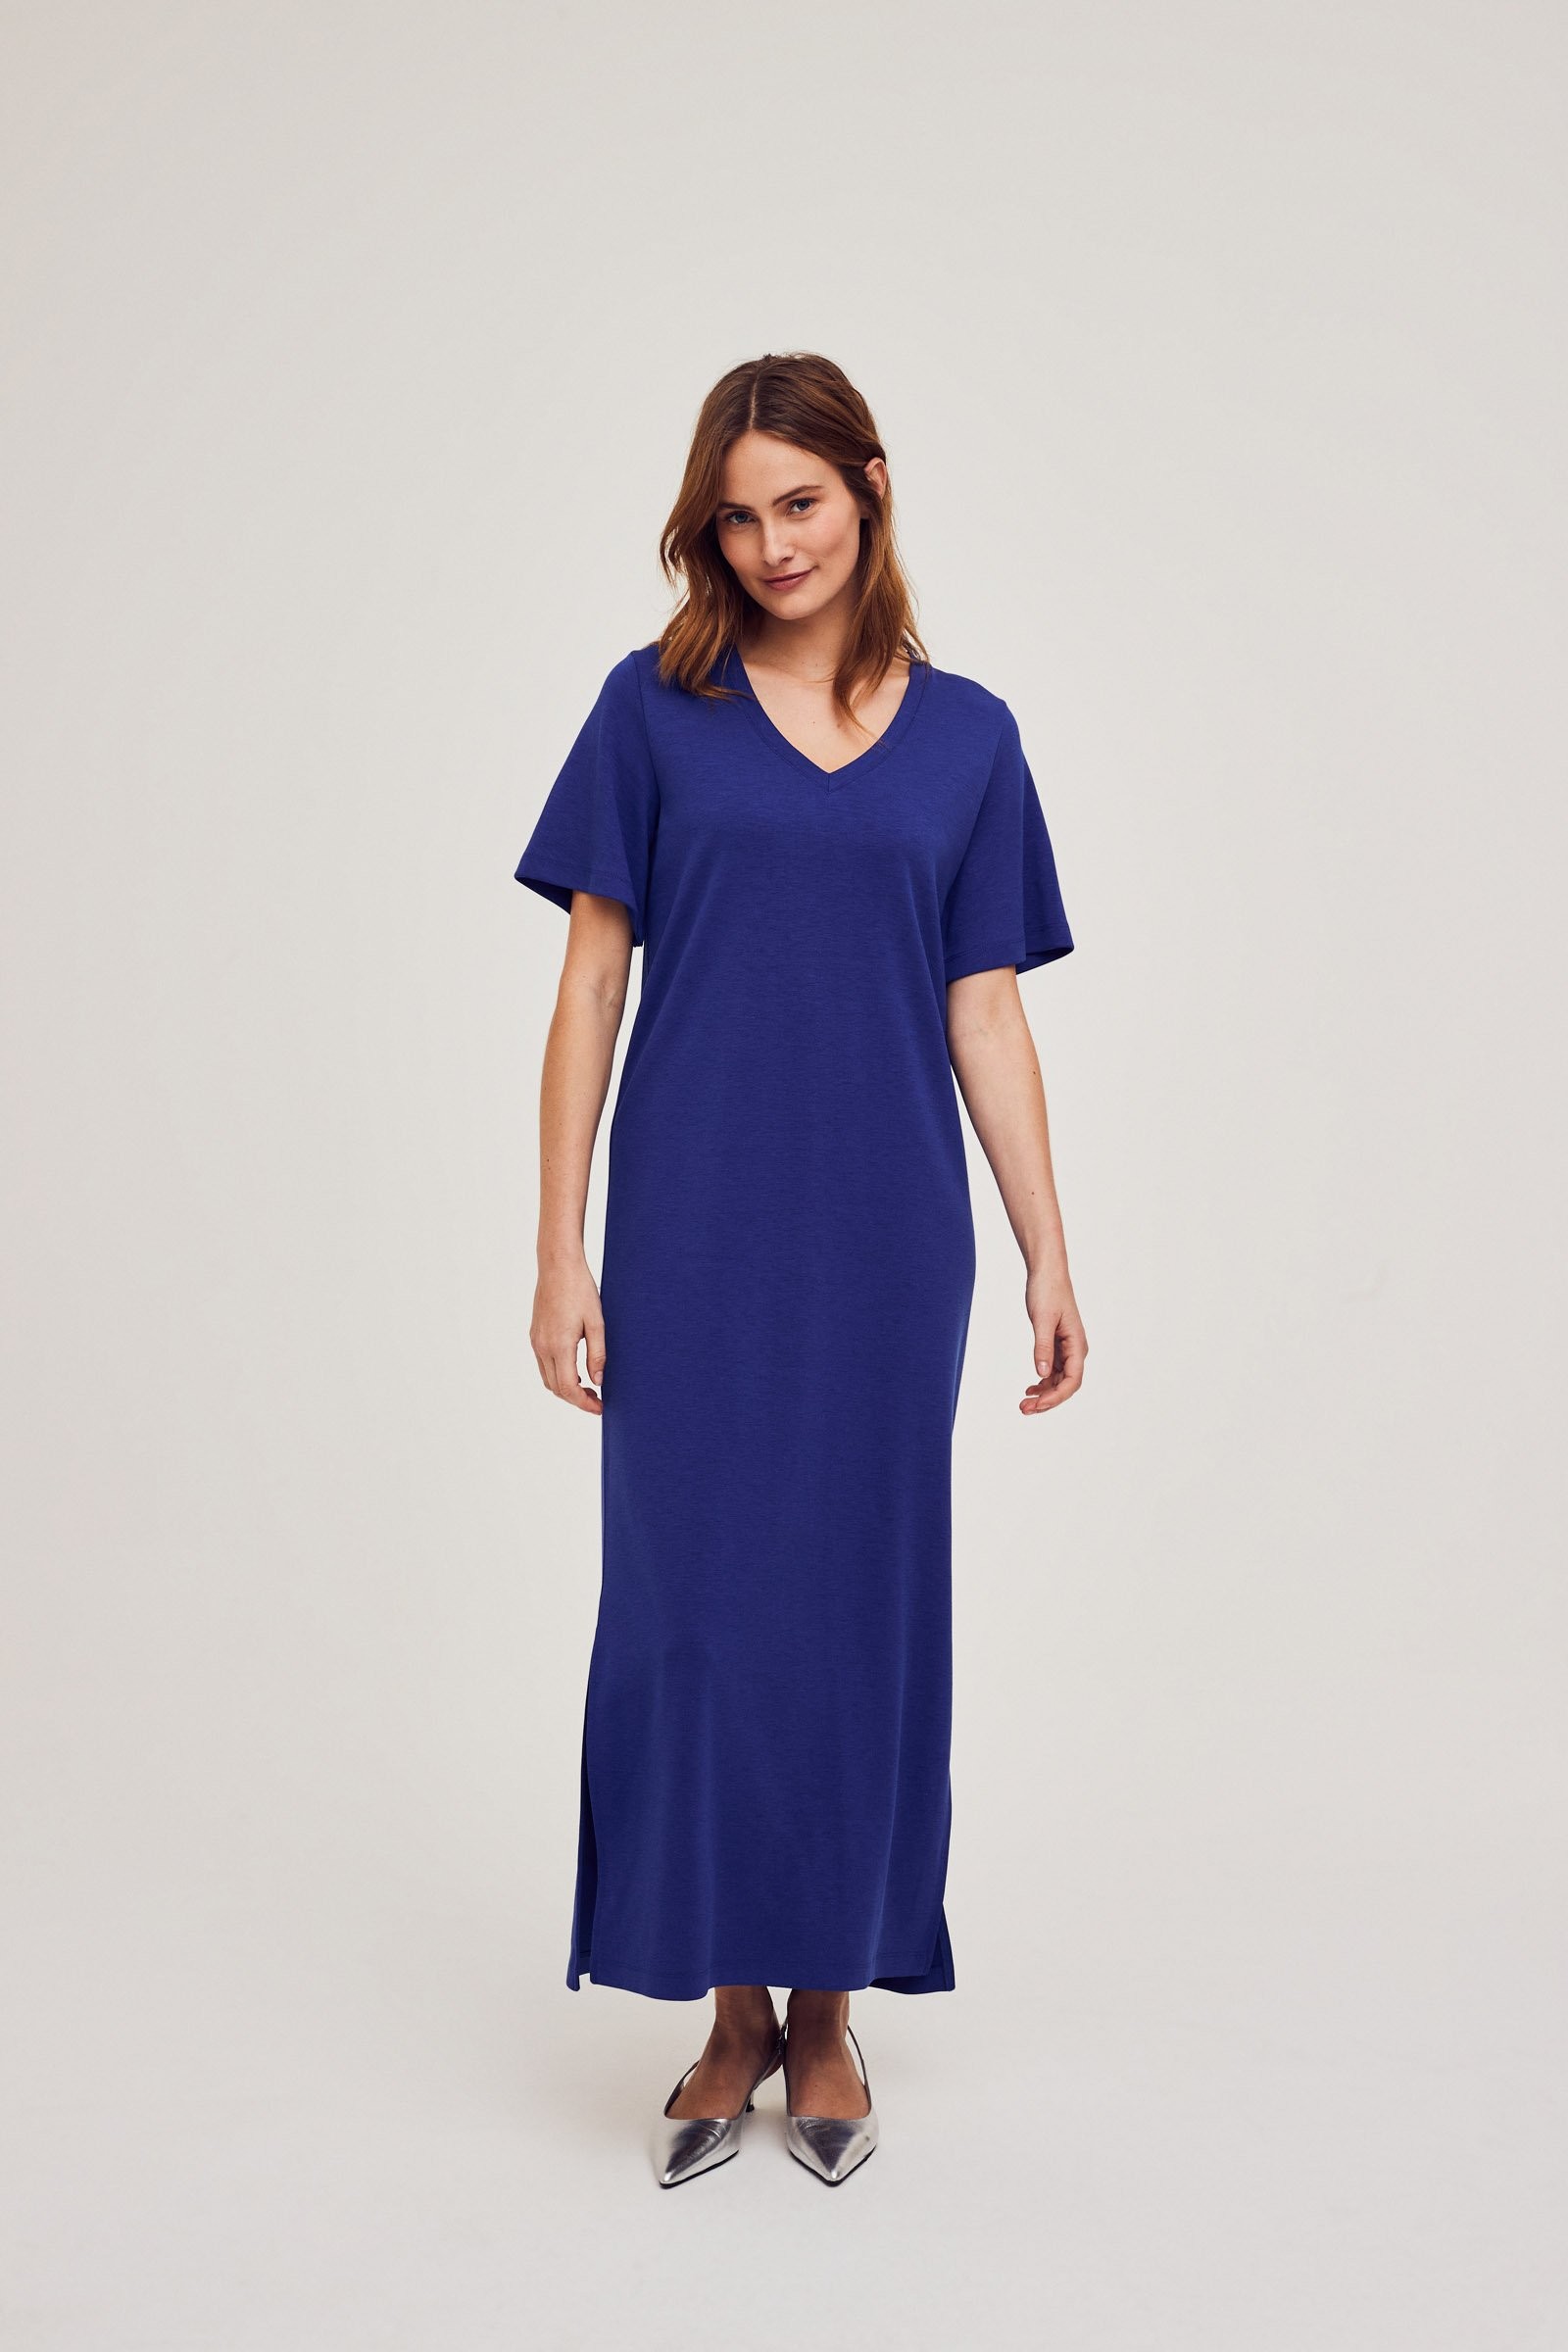 JILL - lange jurk - blauw | CKS Fashion